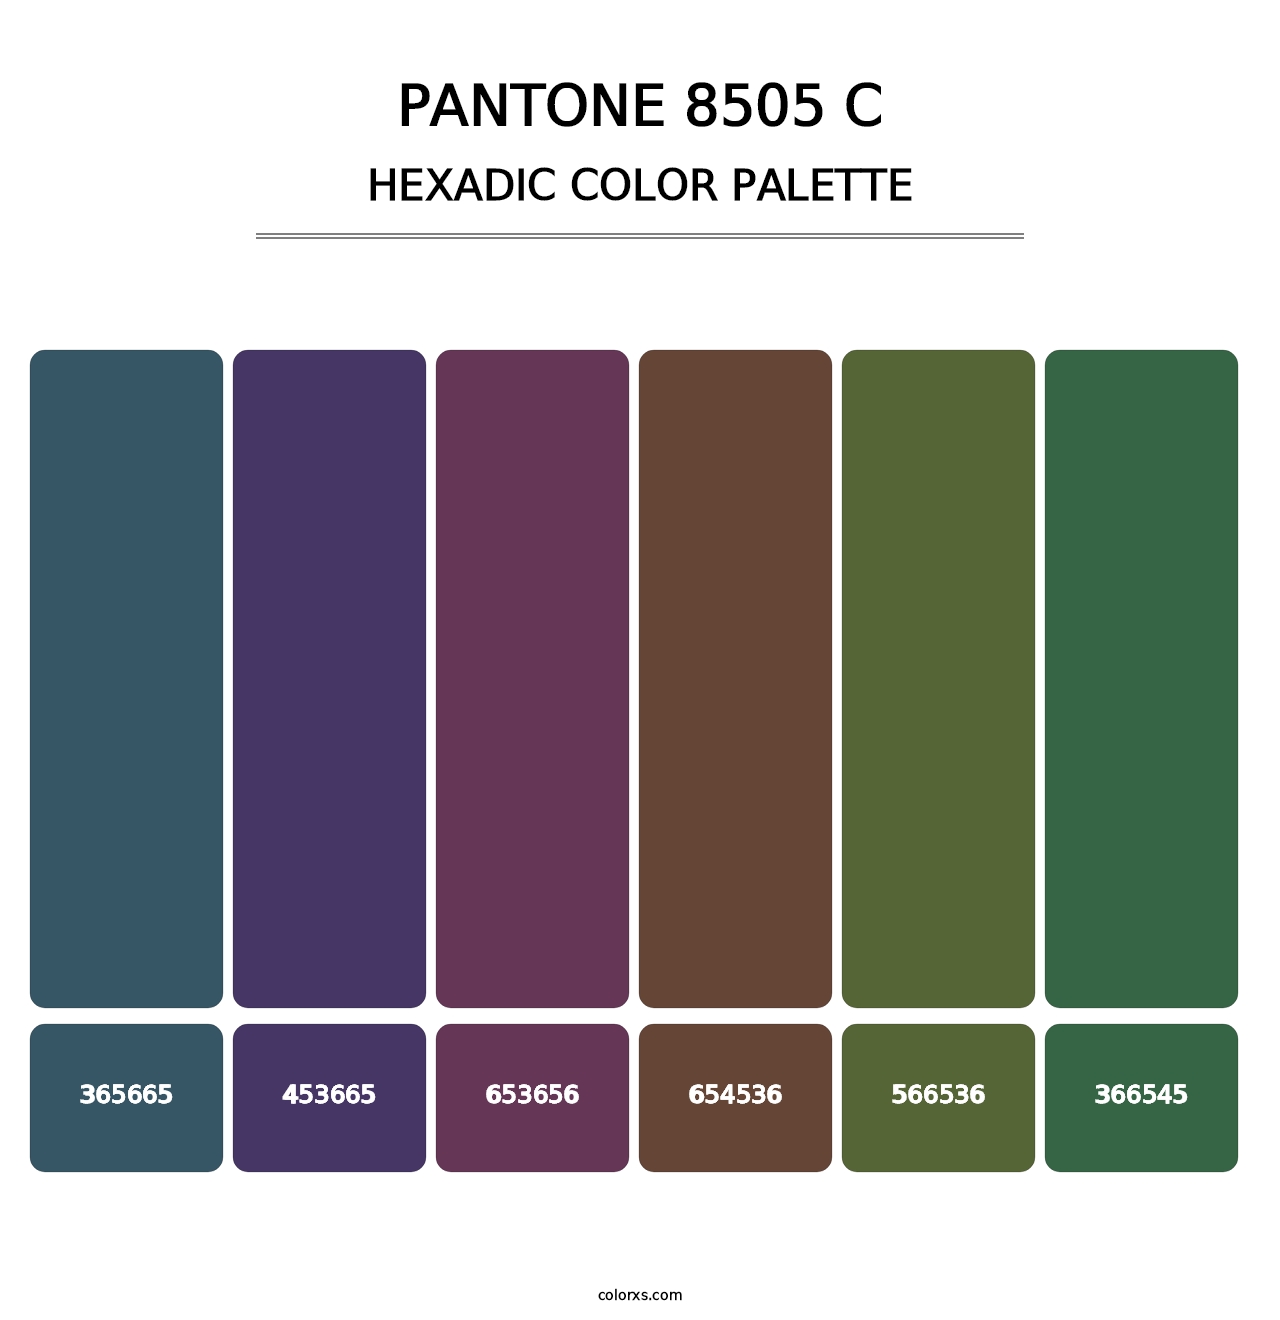 PANTONE 8505 C - Hexadic Color Palette